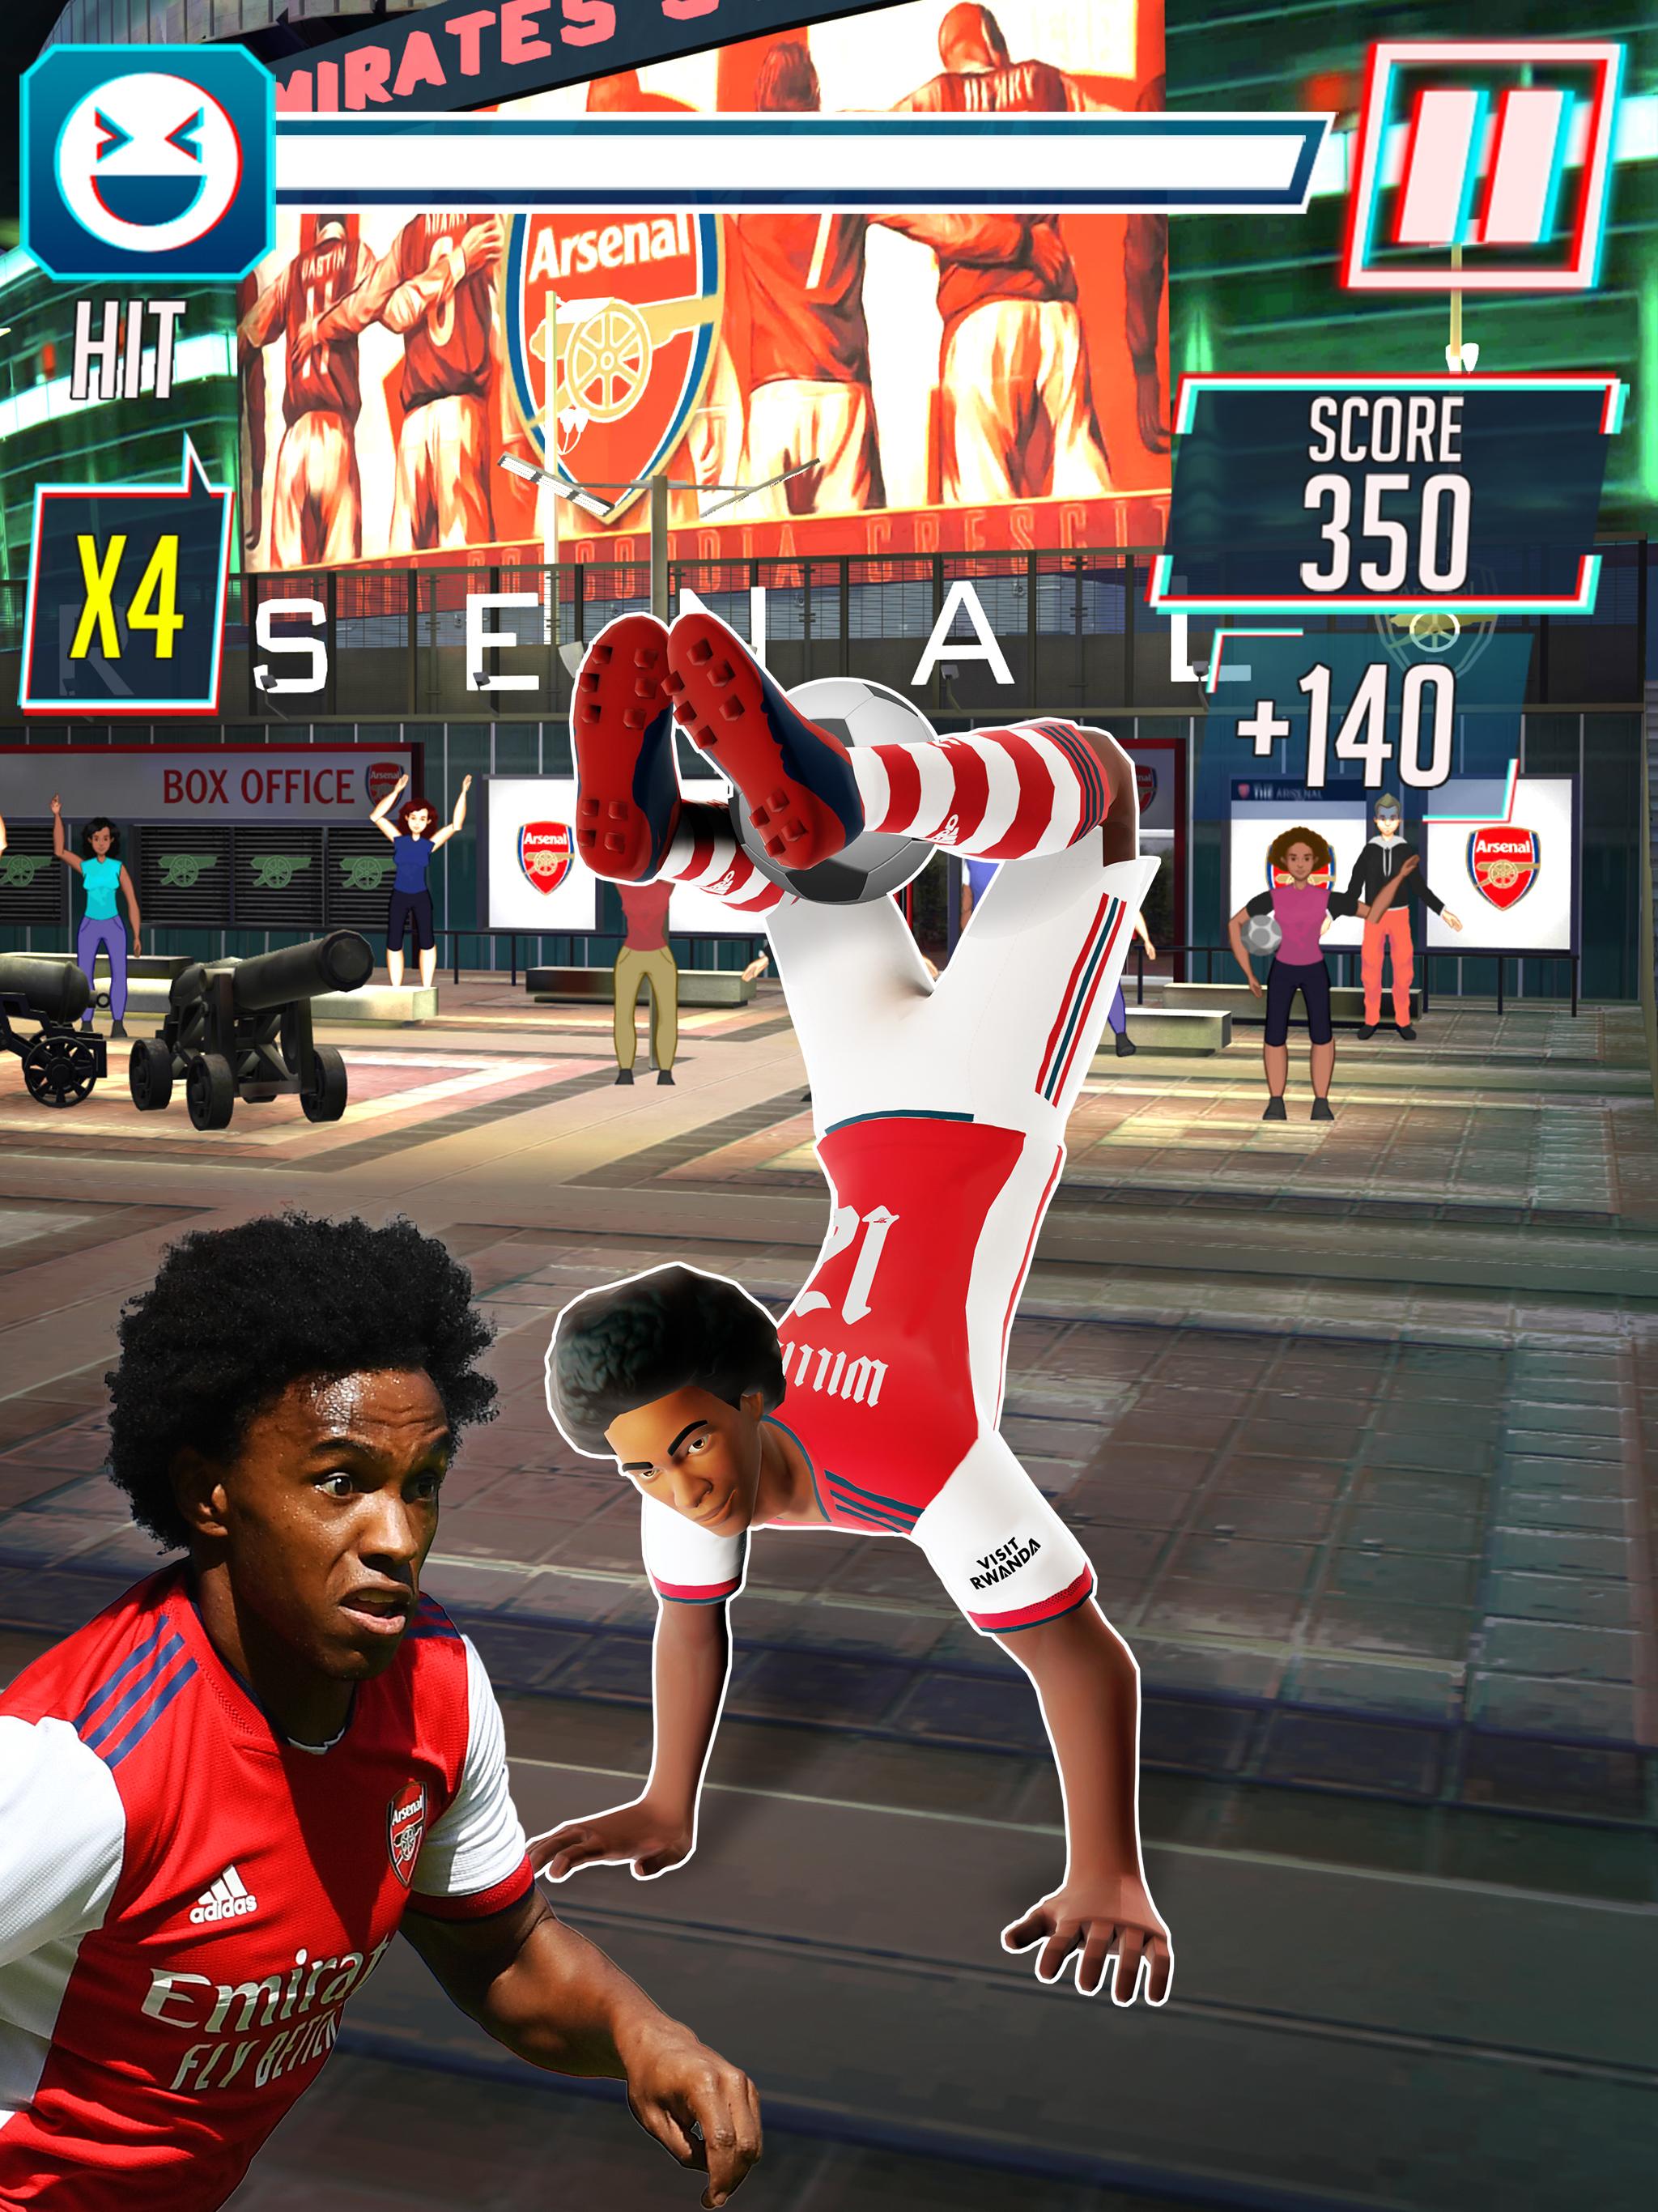 Arsenal Freestyle Show 1.0.6.21 Screenshot 11